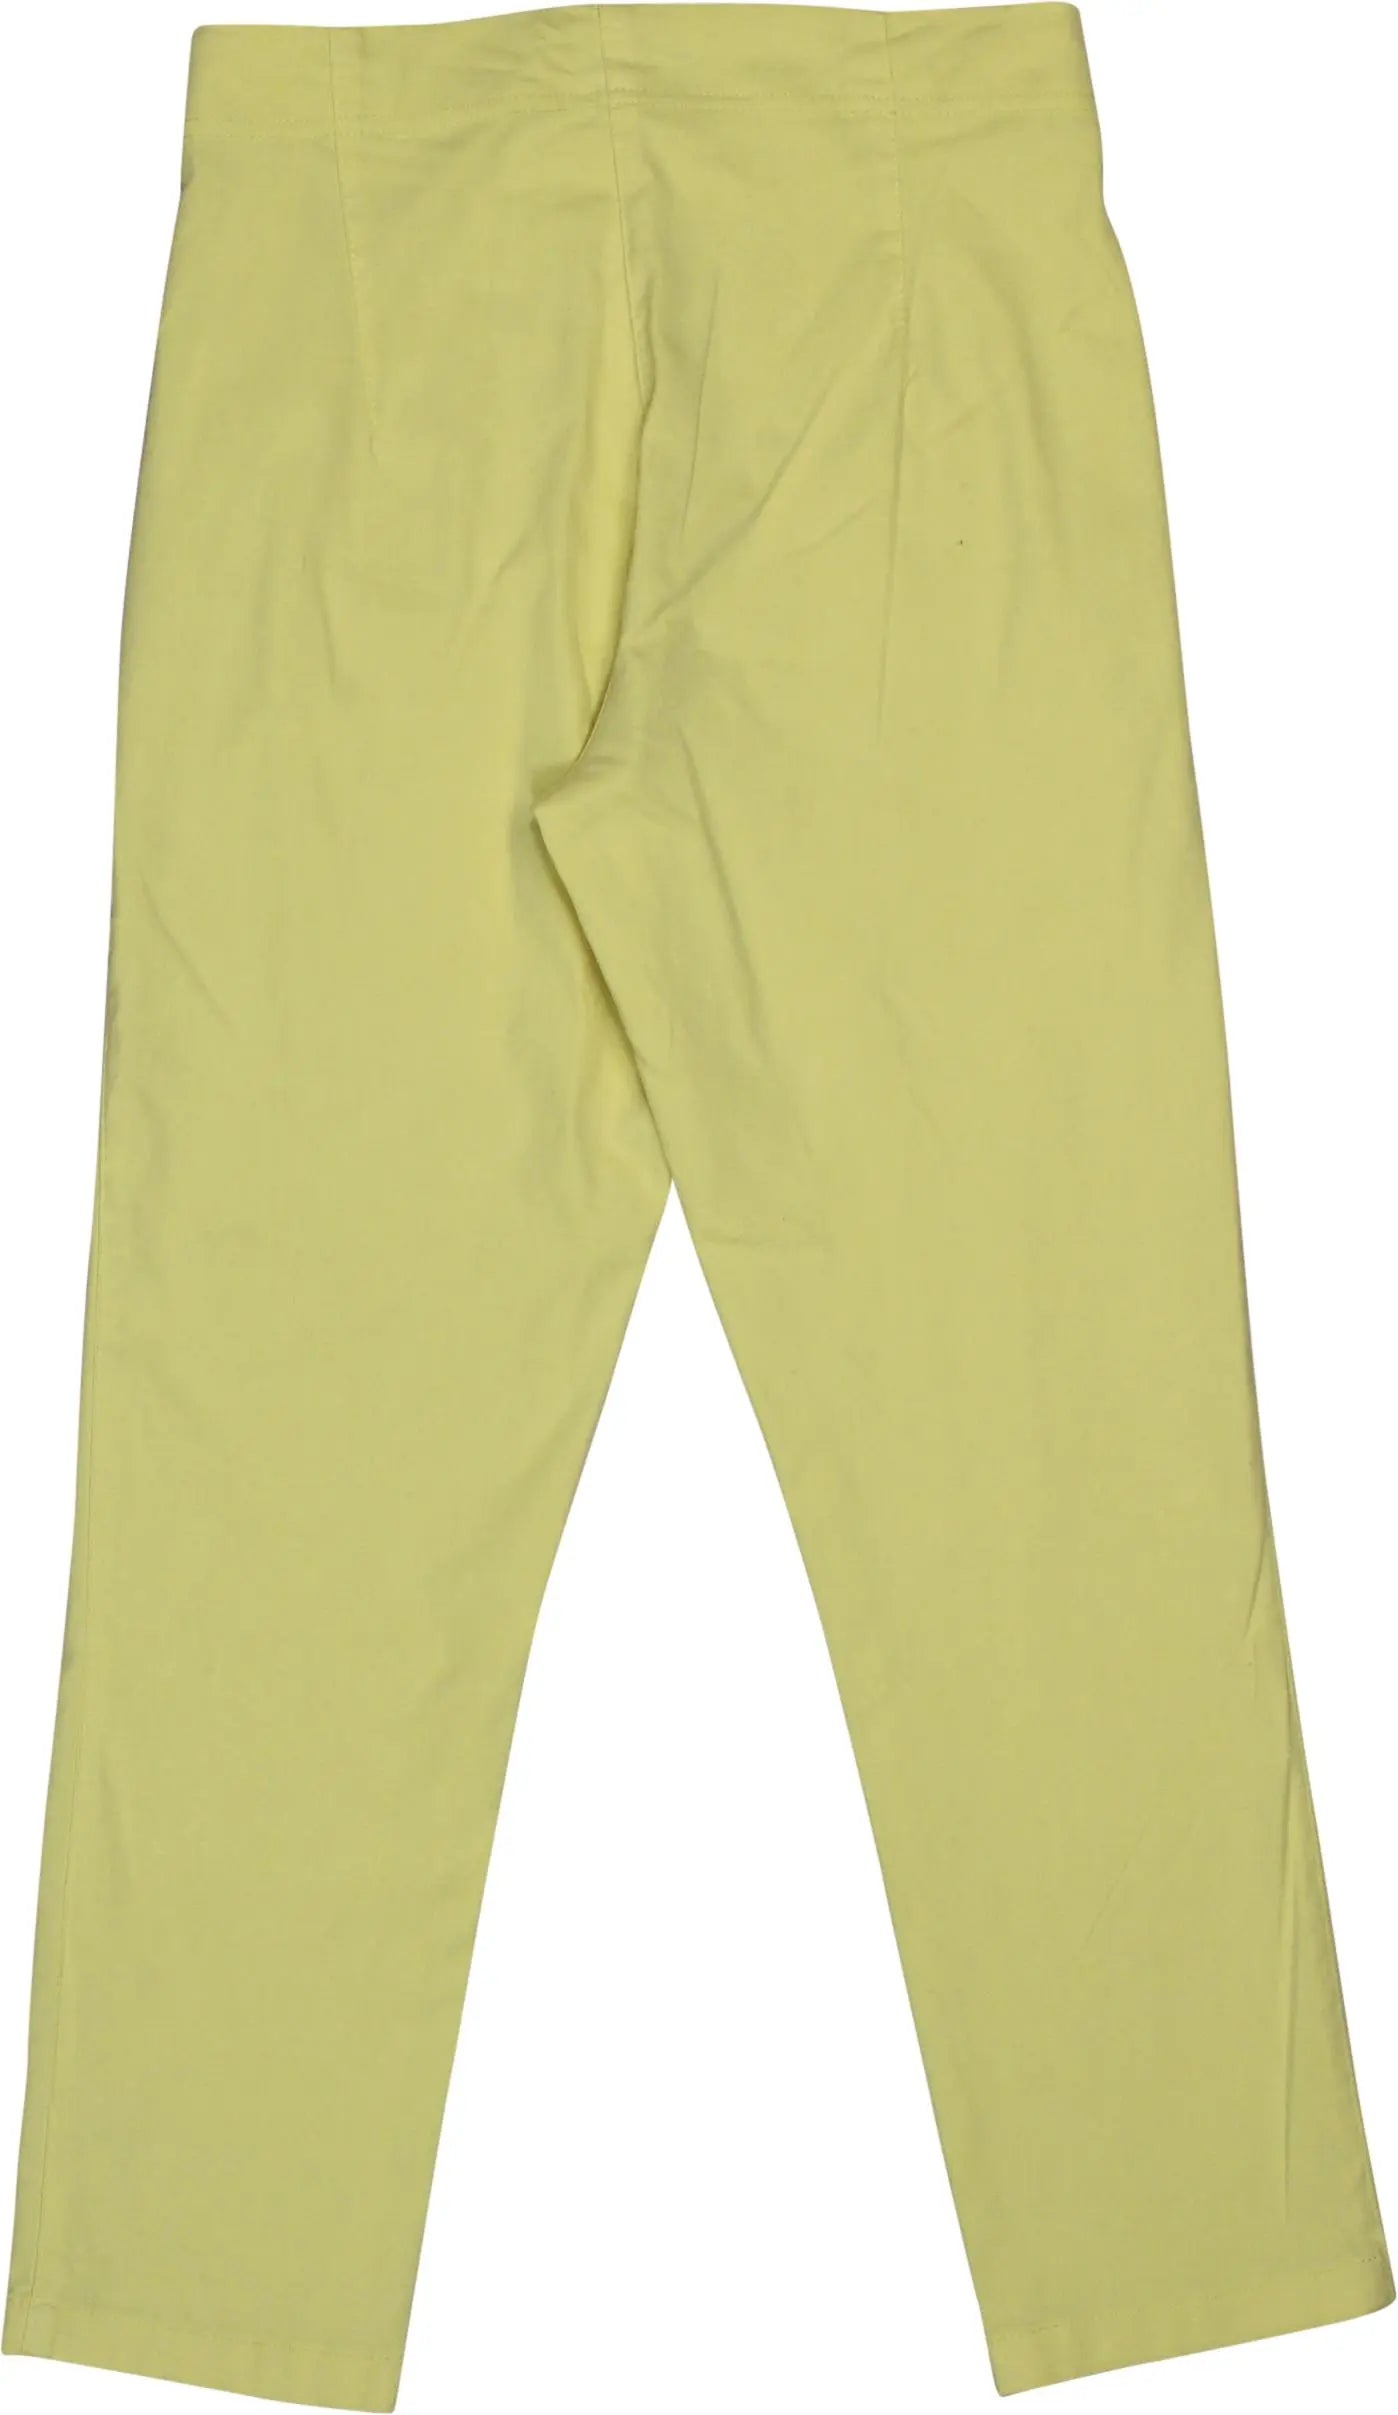 Miss Etam - Capri Trousers- ThriftTale.com - Vintage and second handclothing